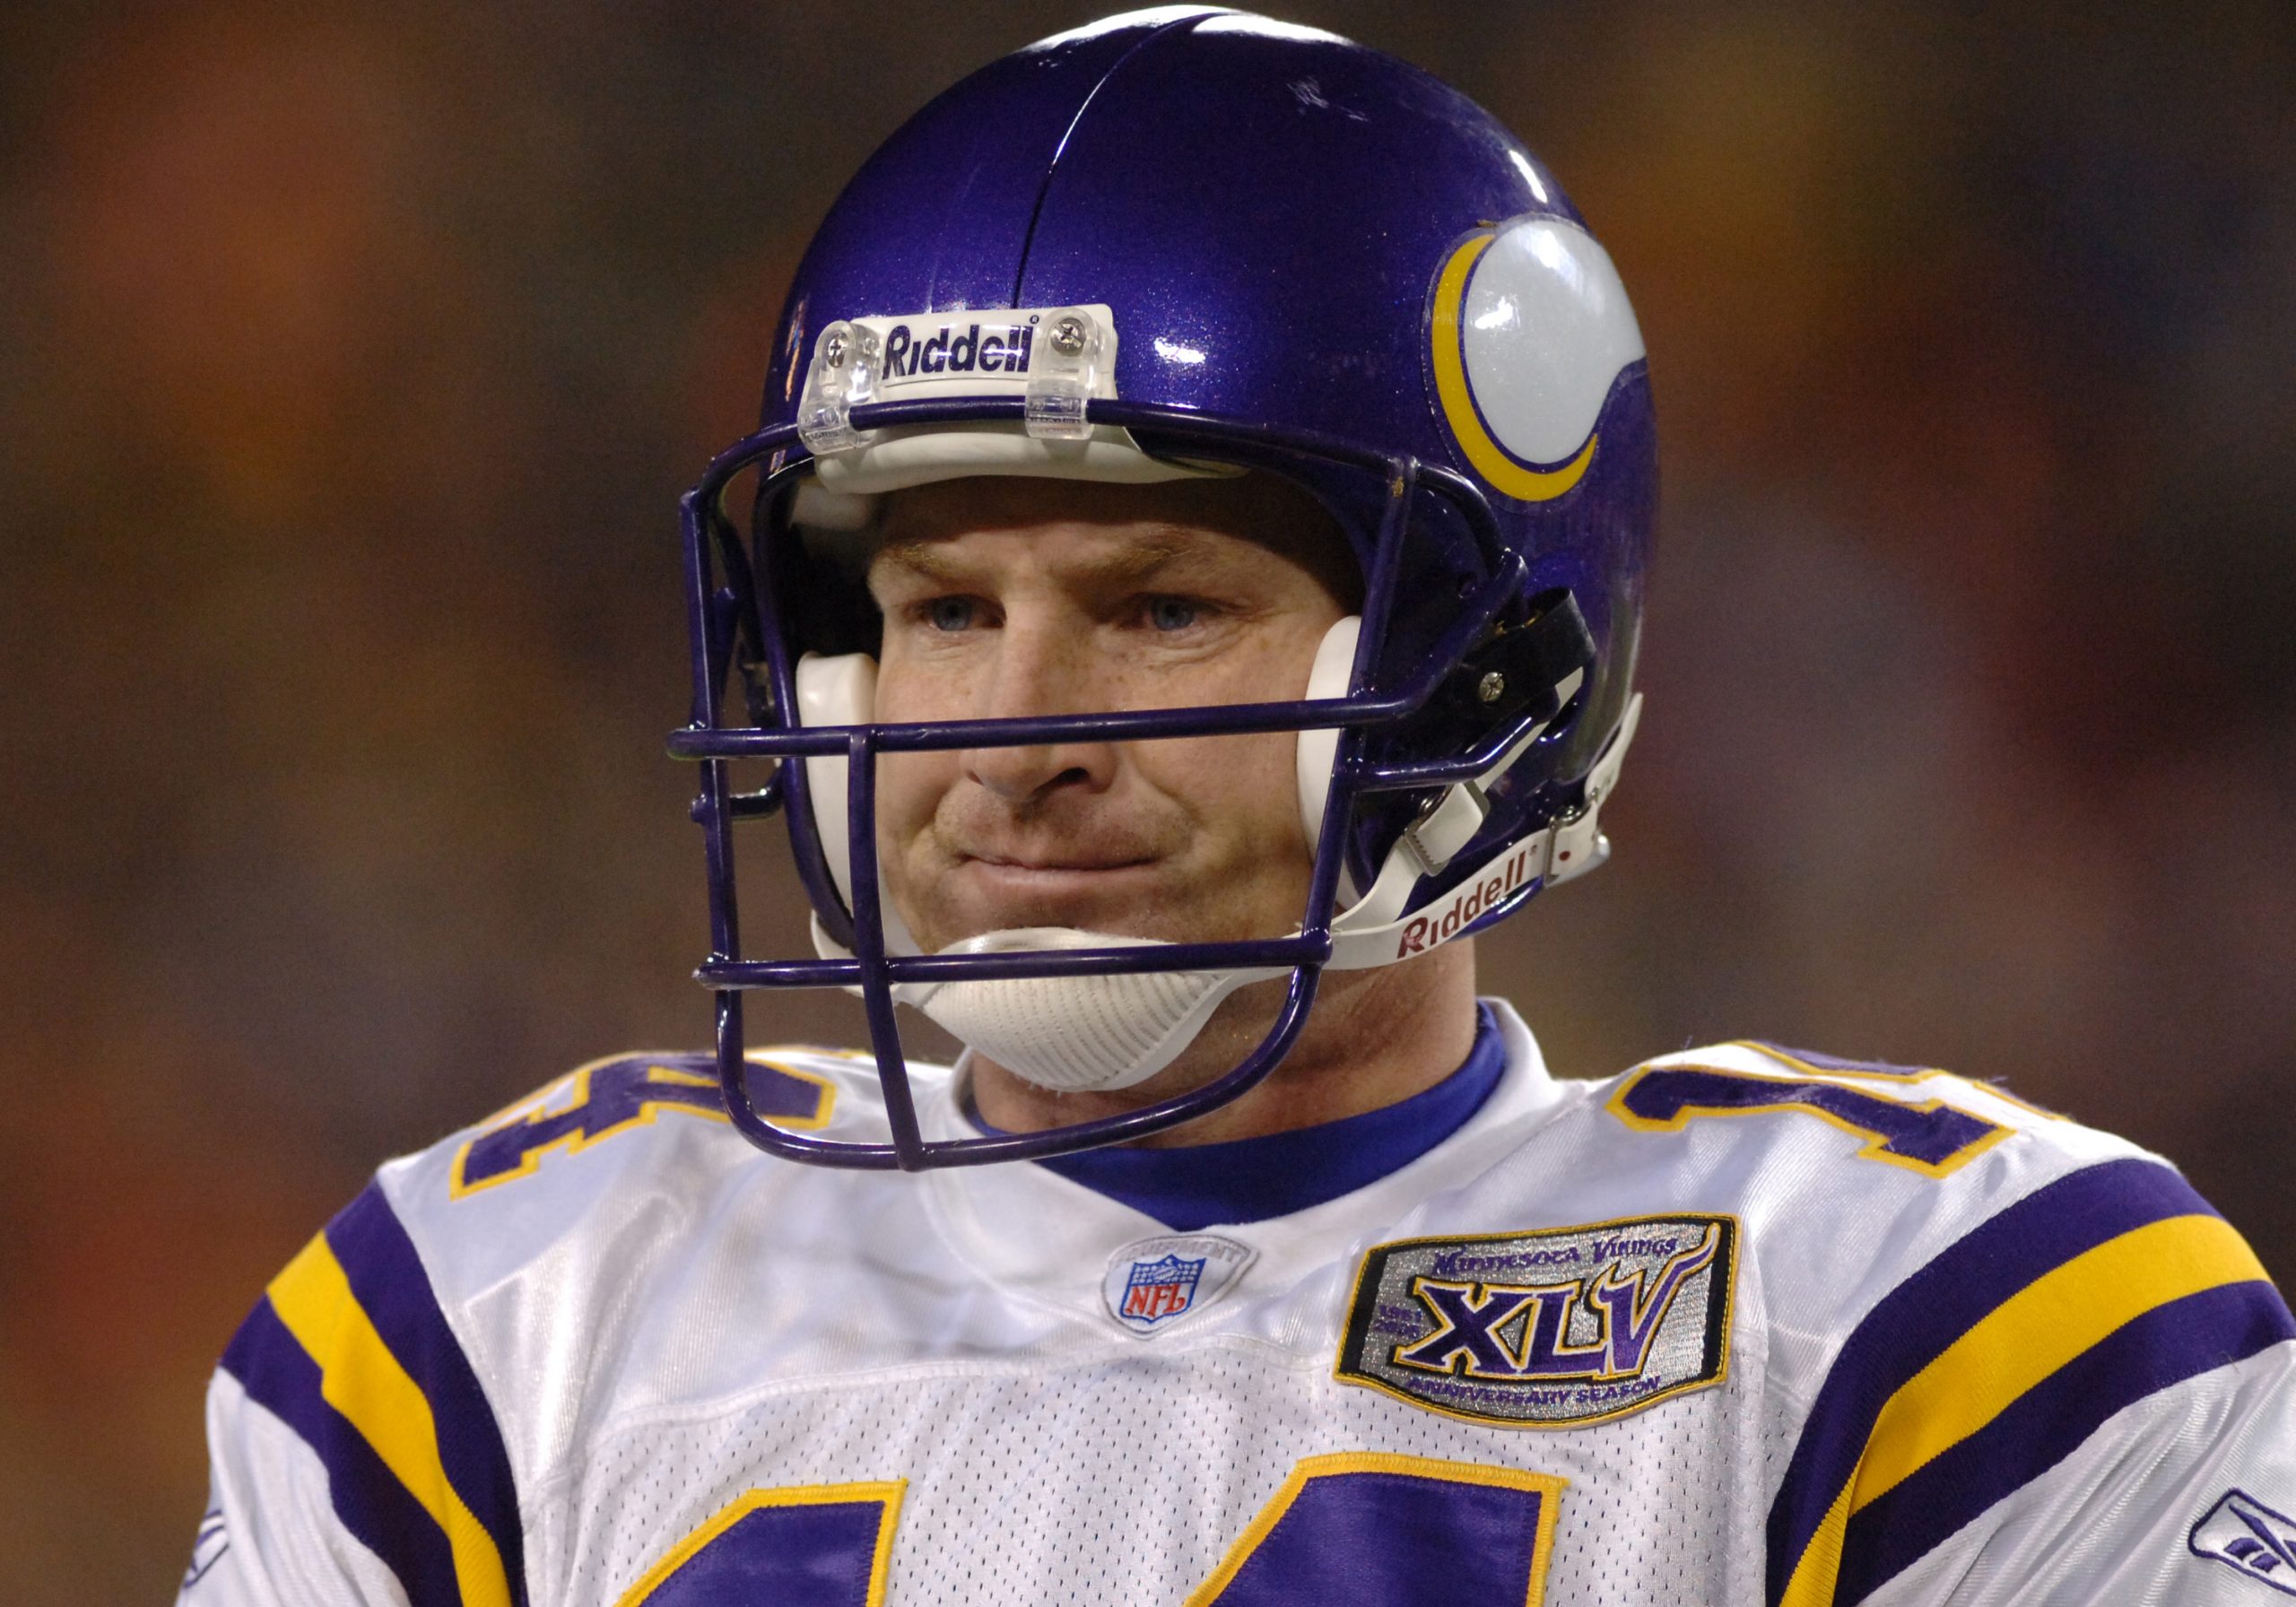 Where did Brad Johnson disappear to before Minnesota Vikings home games?